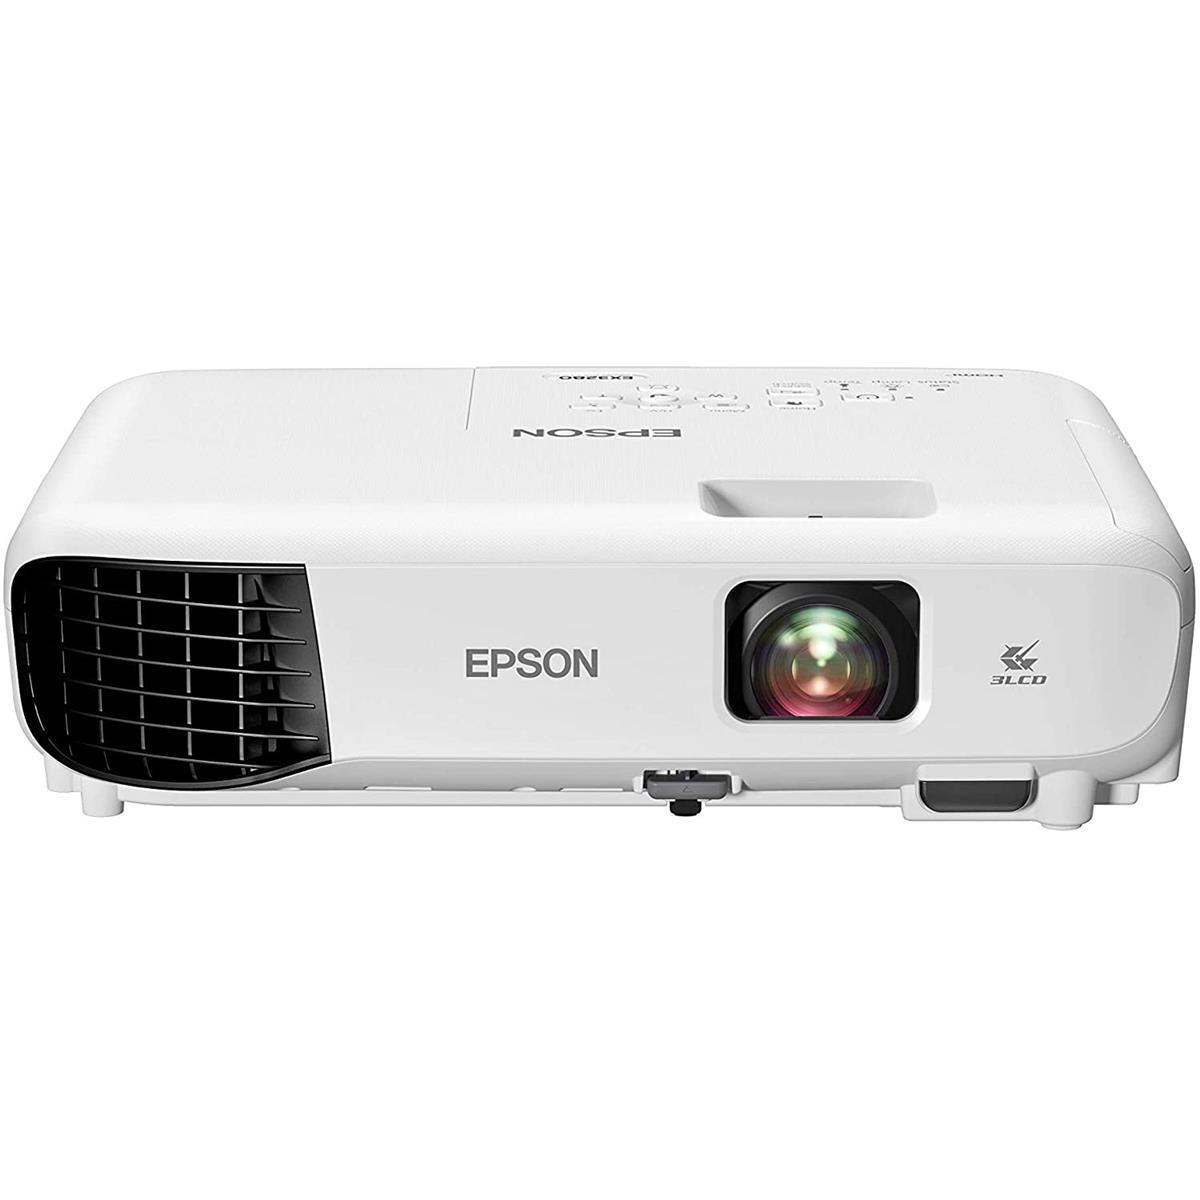 Image of Epson EX3280 3LCD XGA Projector